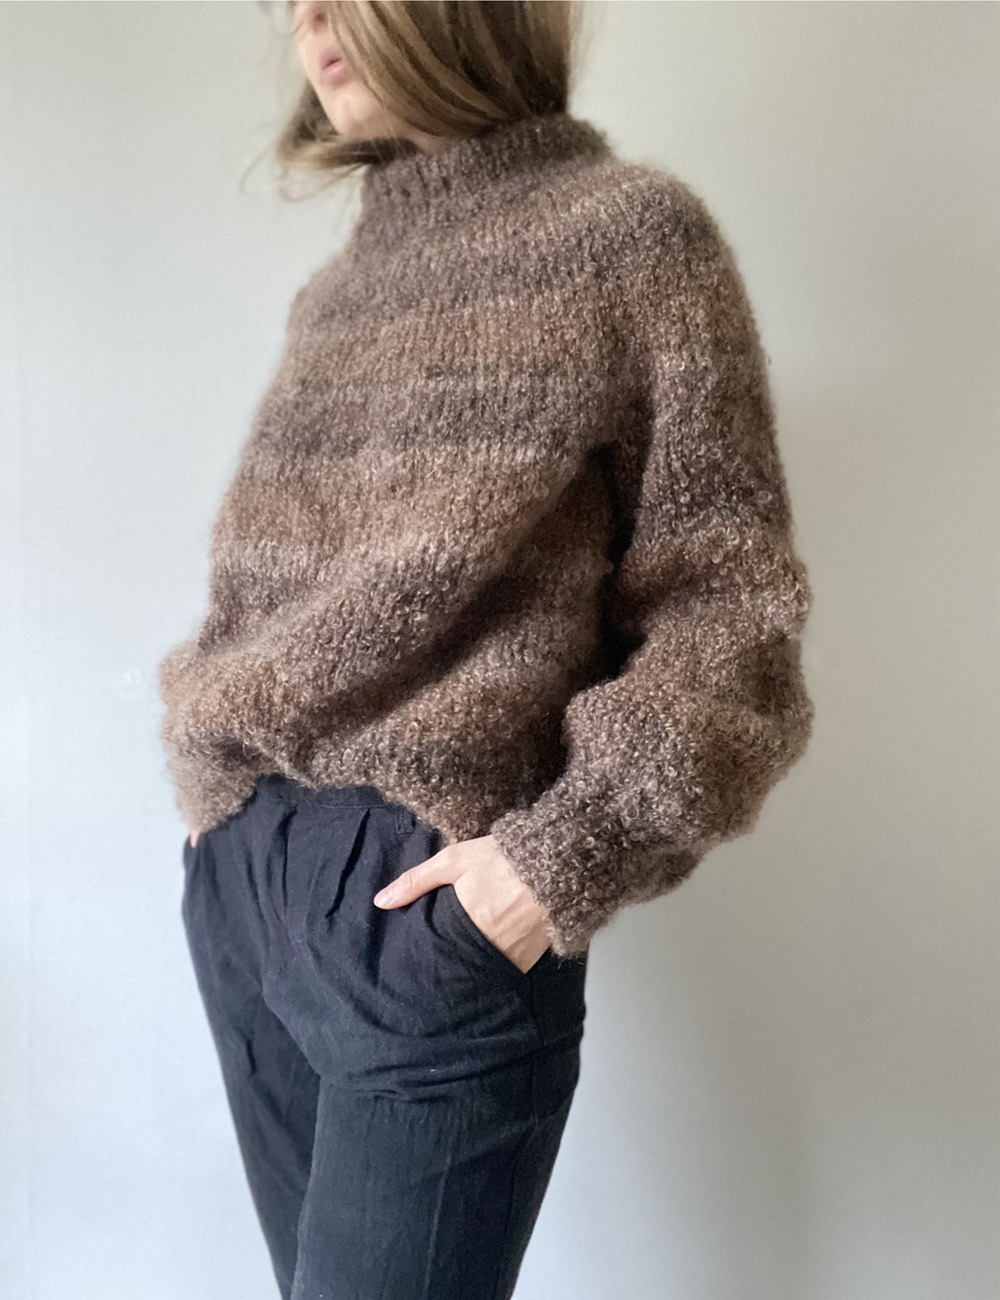 Chocolate Sweater Pattern - leKnit - Lene Holme Samsoe - (UK)